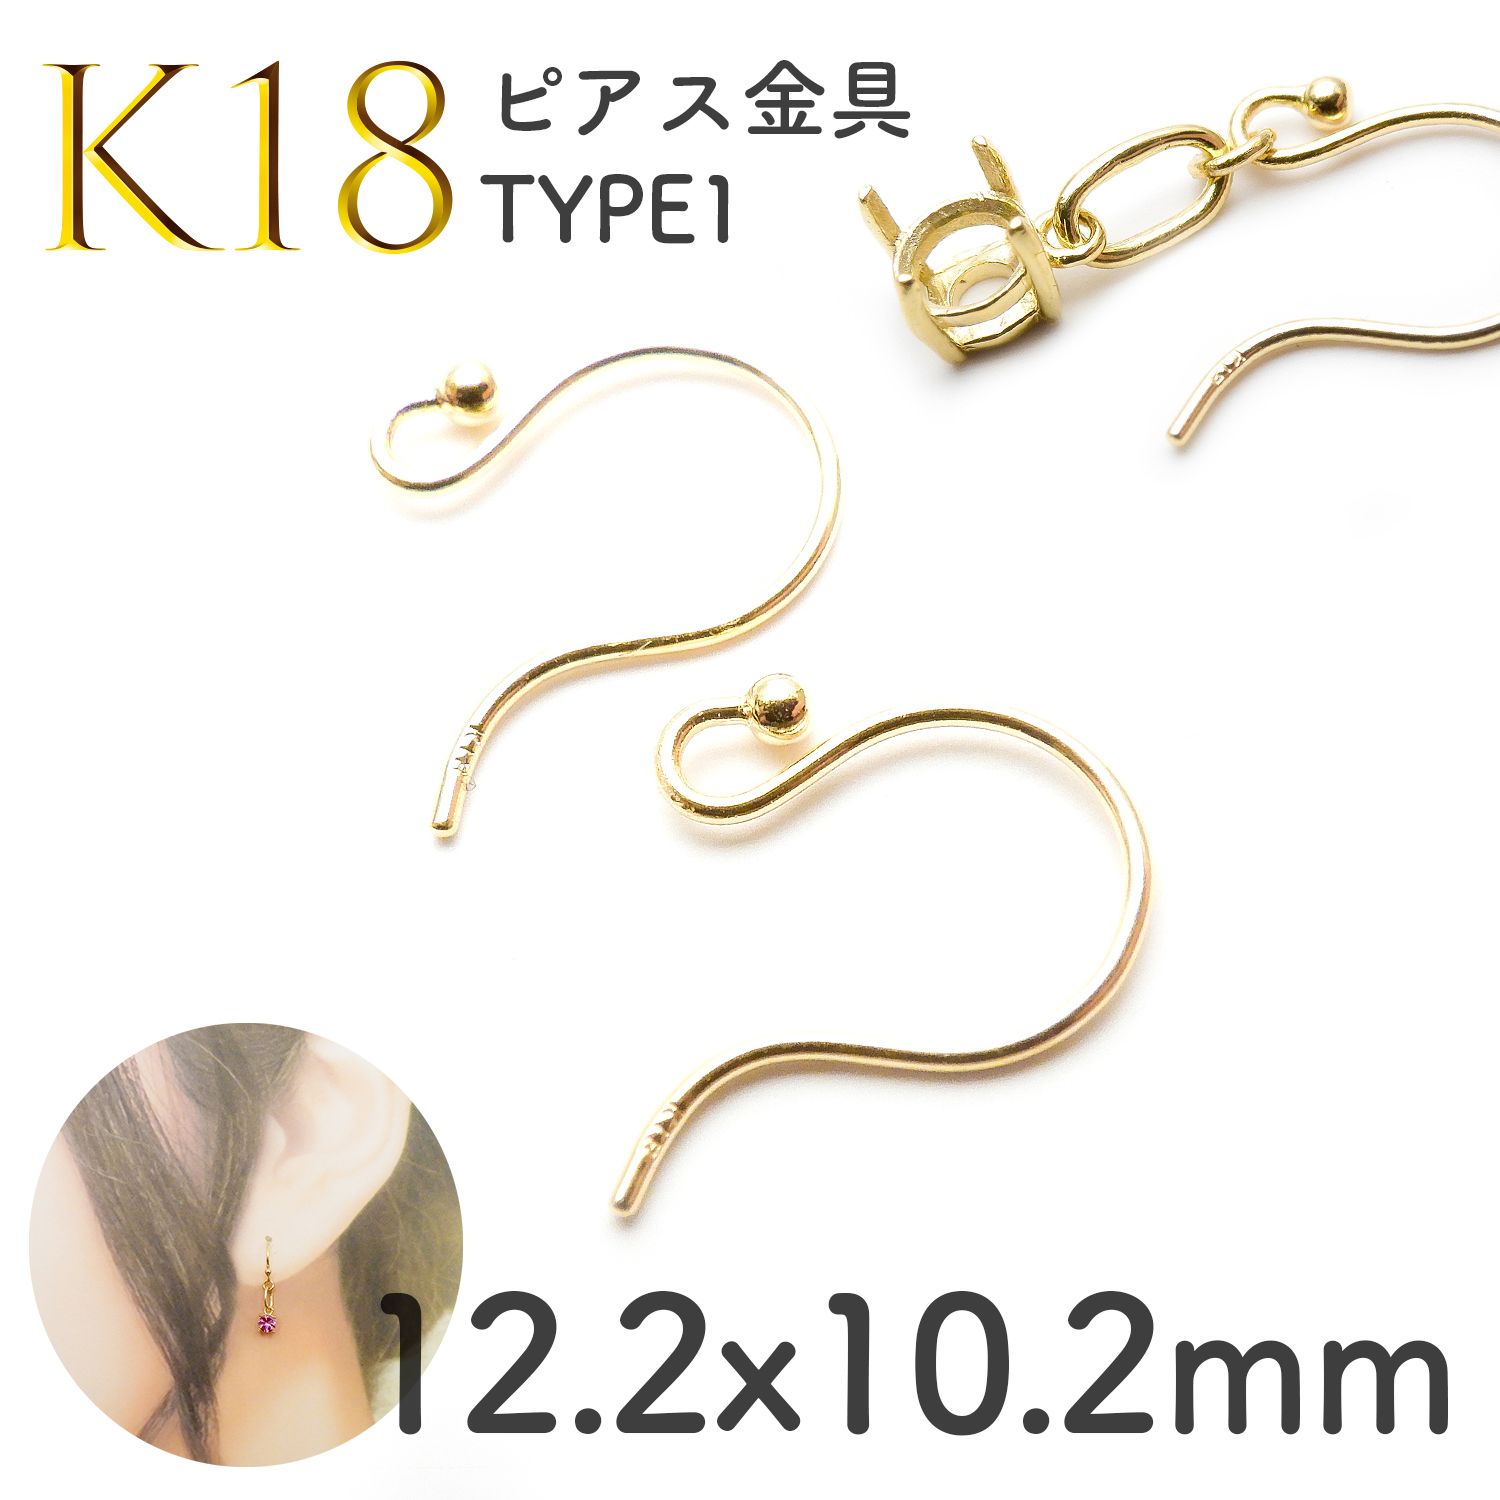 K18 ピアス金具 Type1[069]約12.2mm×10.2mm | TOP STONE(トップストーン)